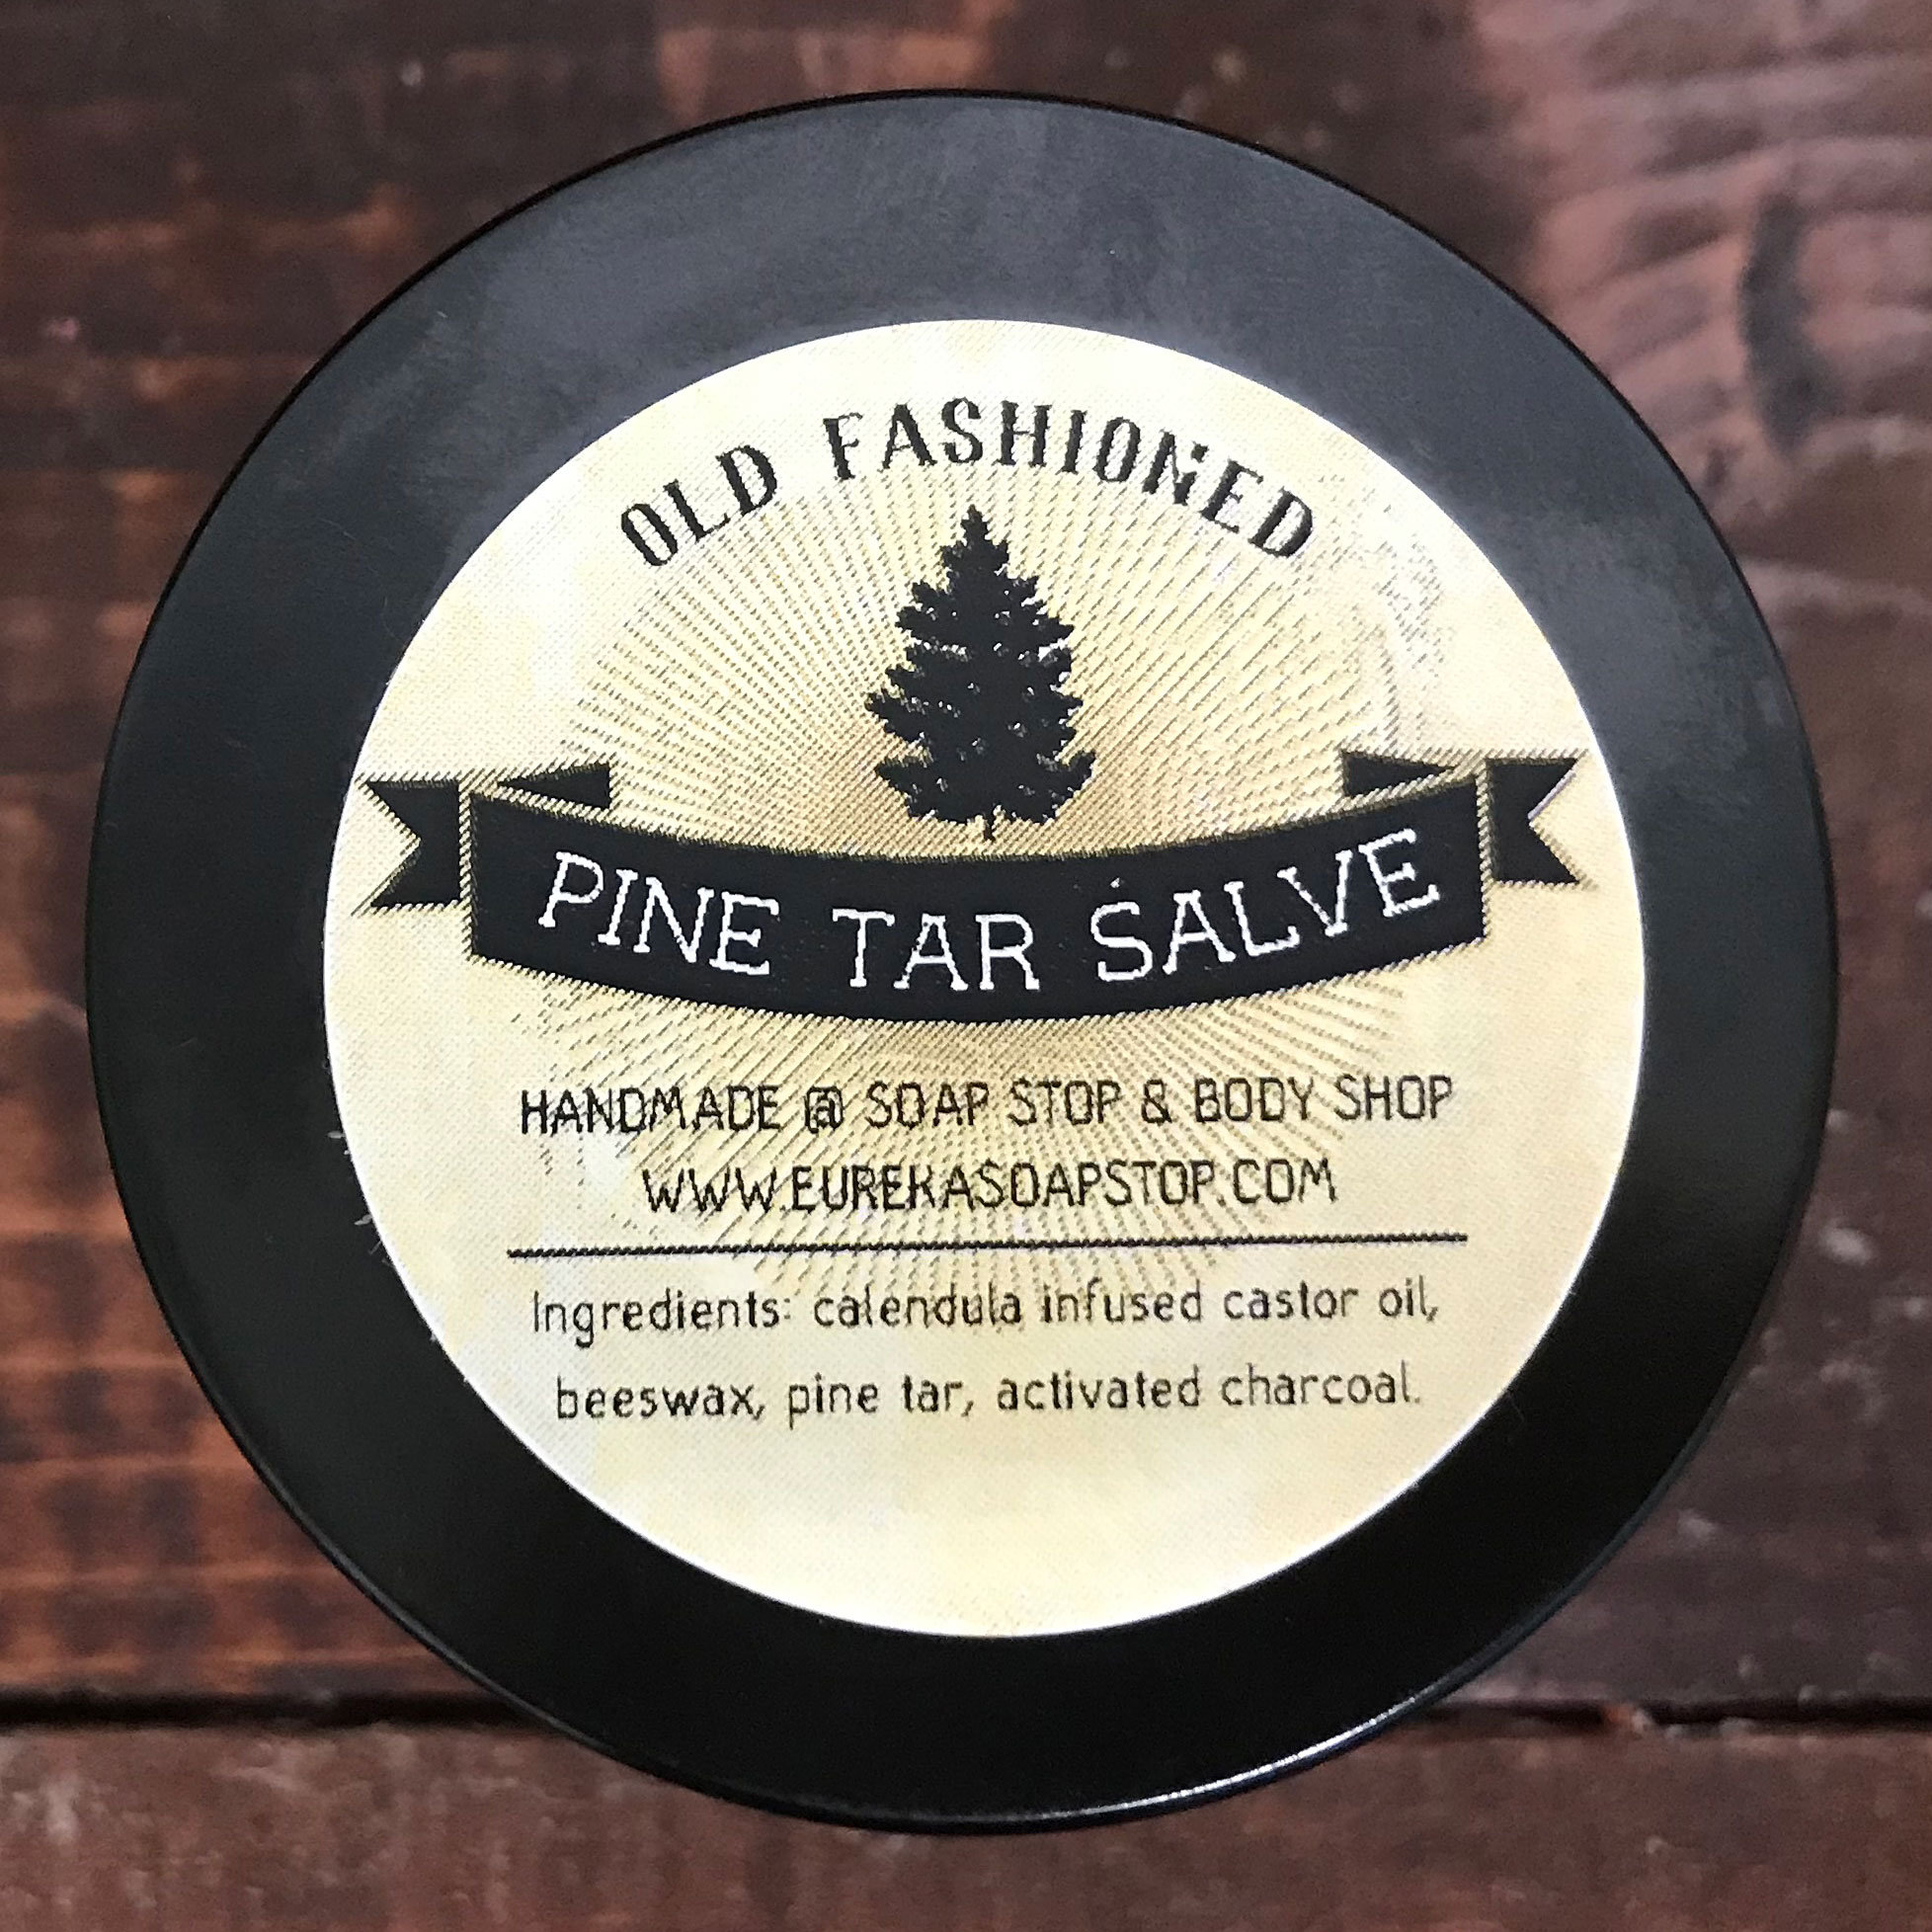 How to Make Pine Tar Salve